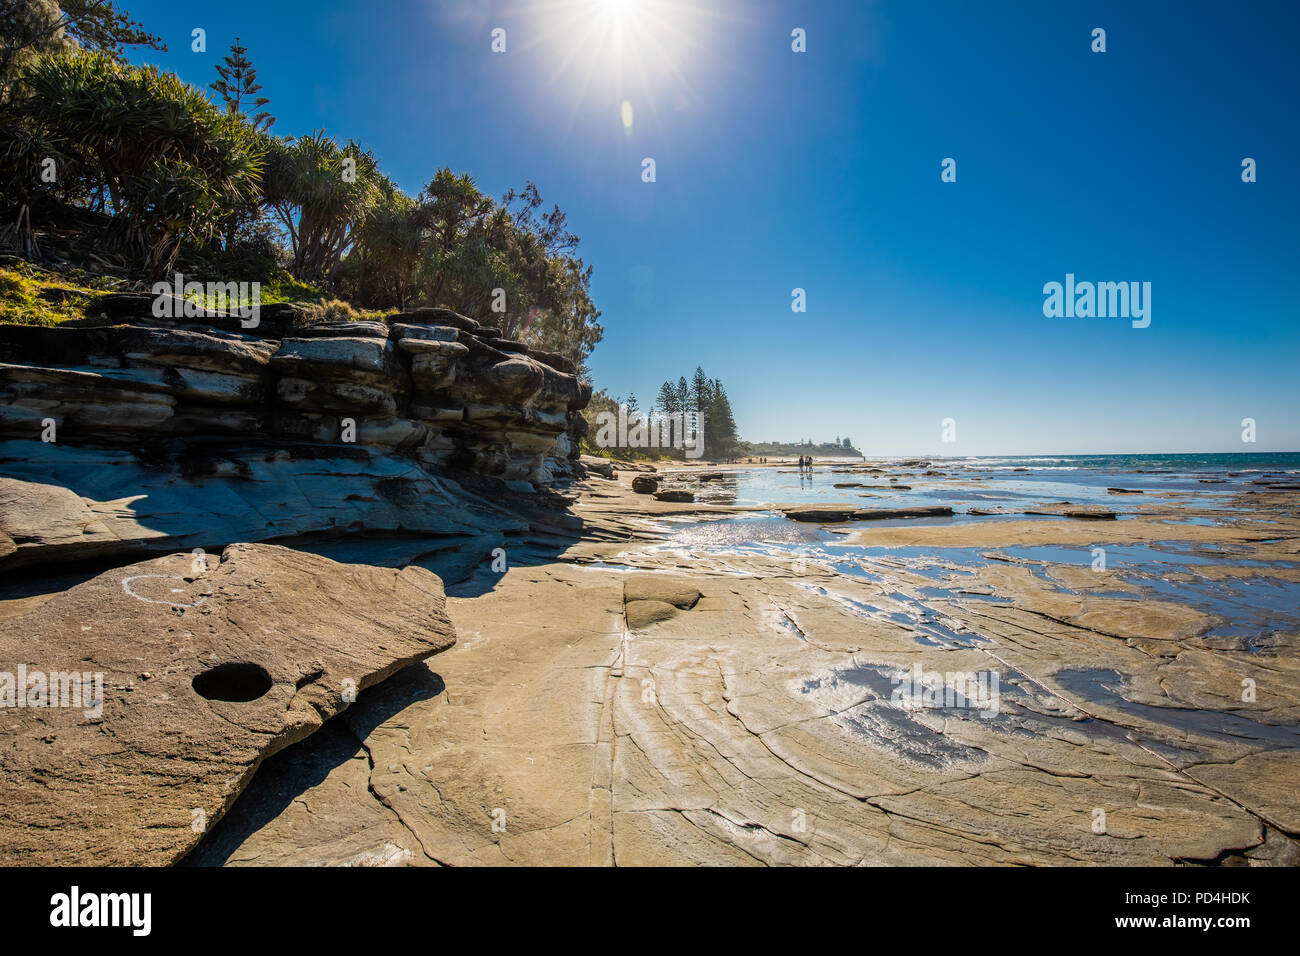 Sunny view of Shelly Beach at Caloundra, Sunshine Coast, Queensland, Australia Stock Photo